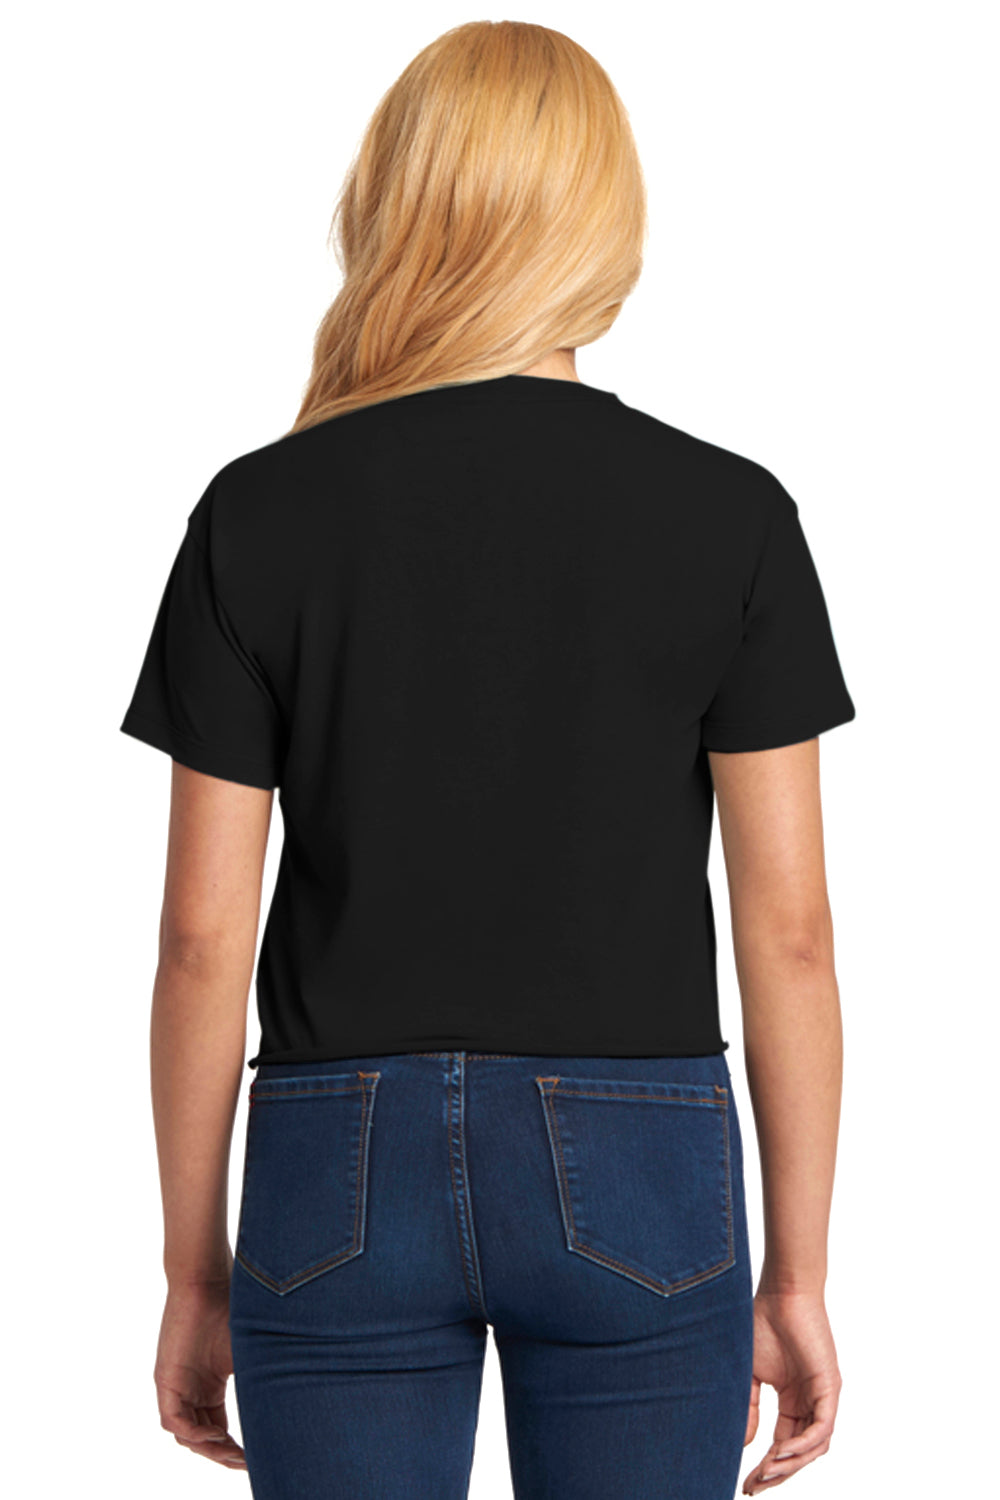 Next Level N5080 Womens Festival Cali Crop Short Sleeve Crewneck T-Shirt Black Back